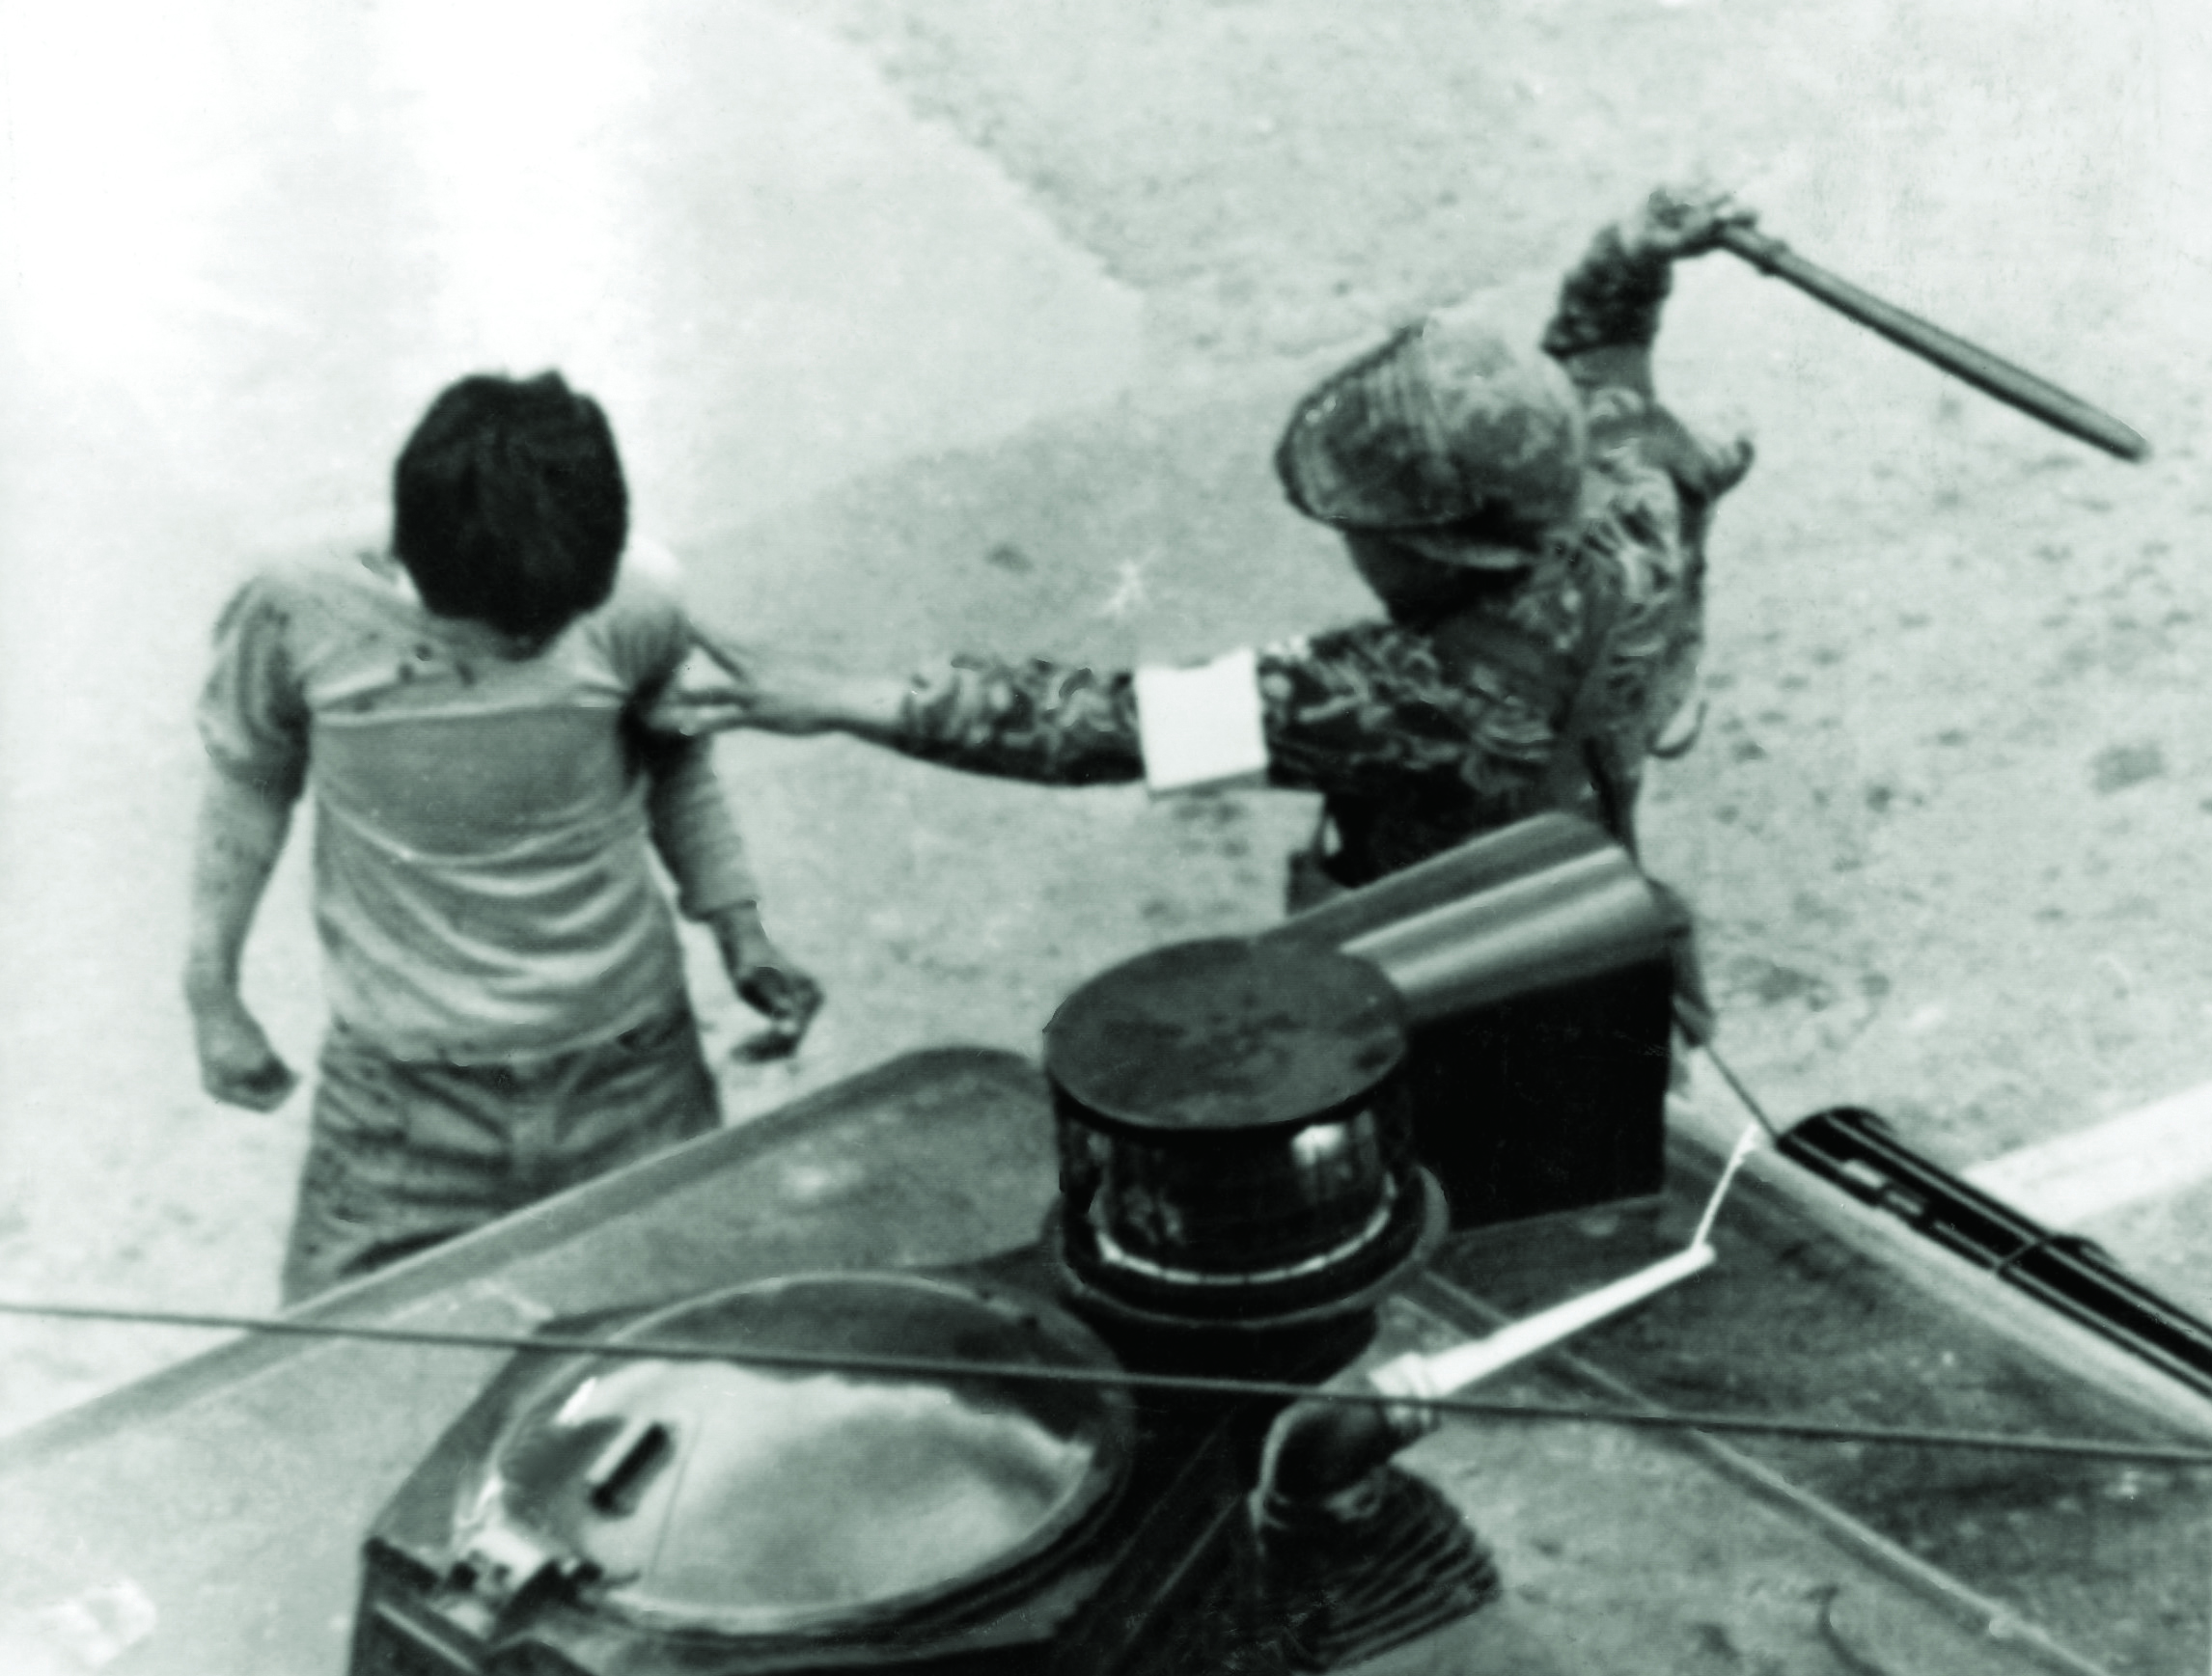 Dying for democracy: 1980 Gwangju uprising transformed South Korea | The Japan Times